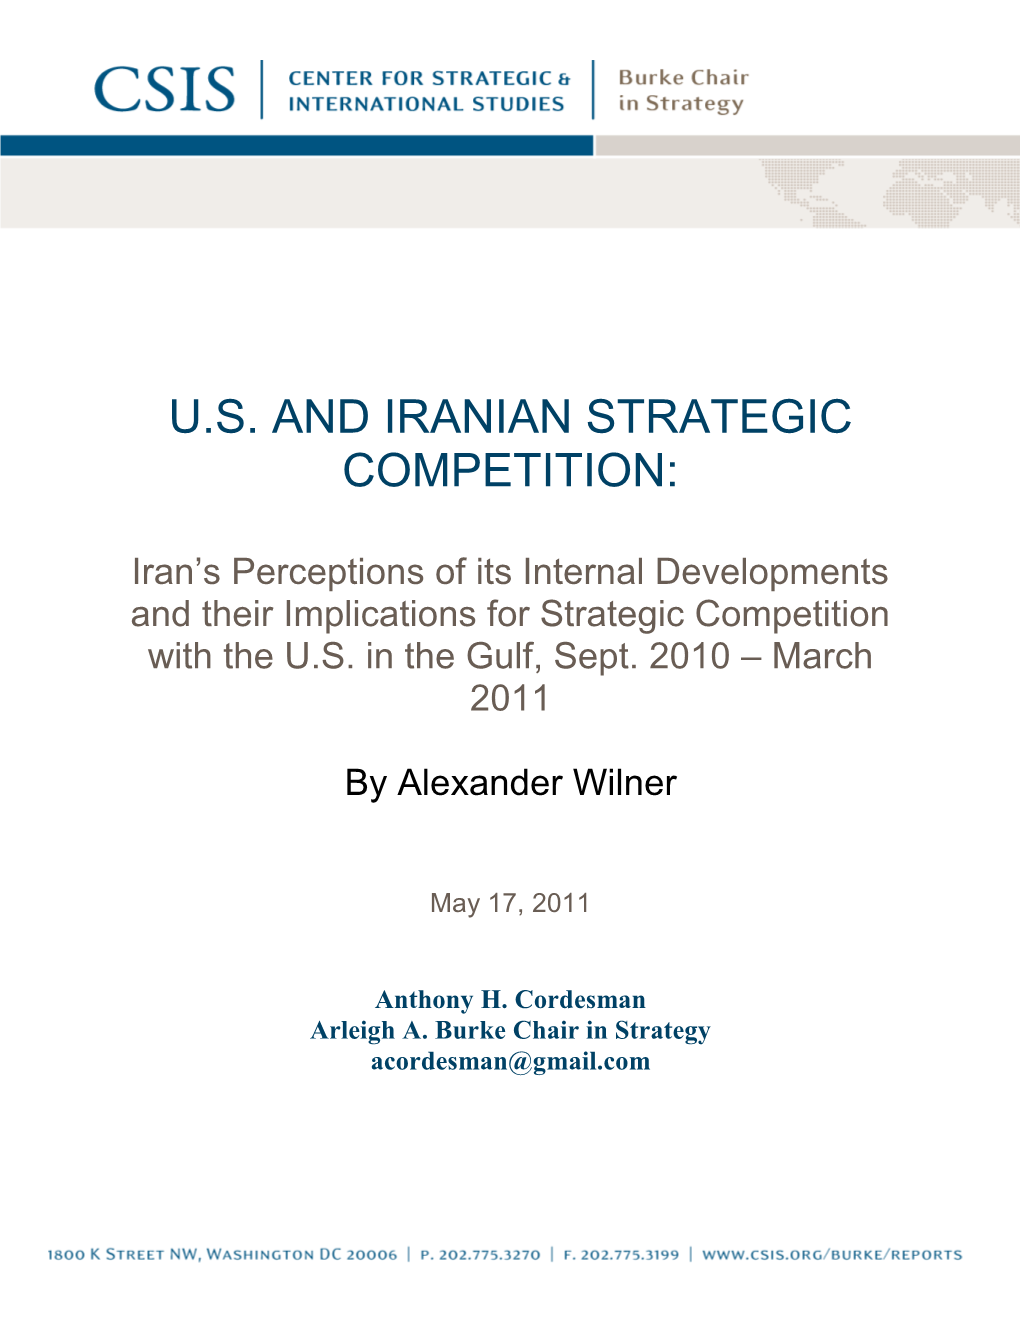 U.S. and Iranian Strategic Competition